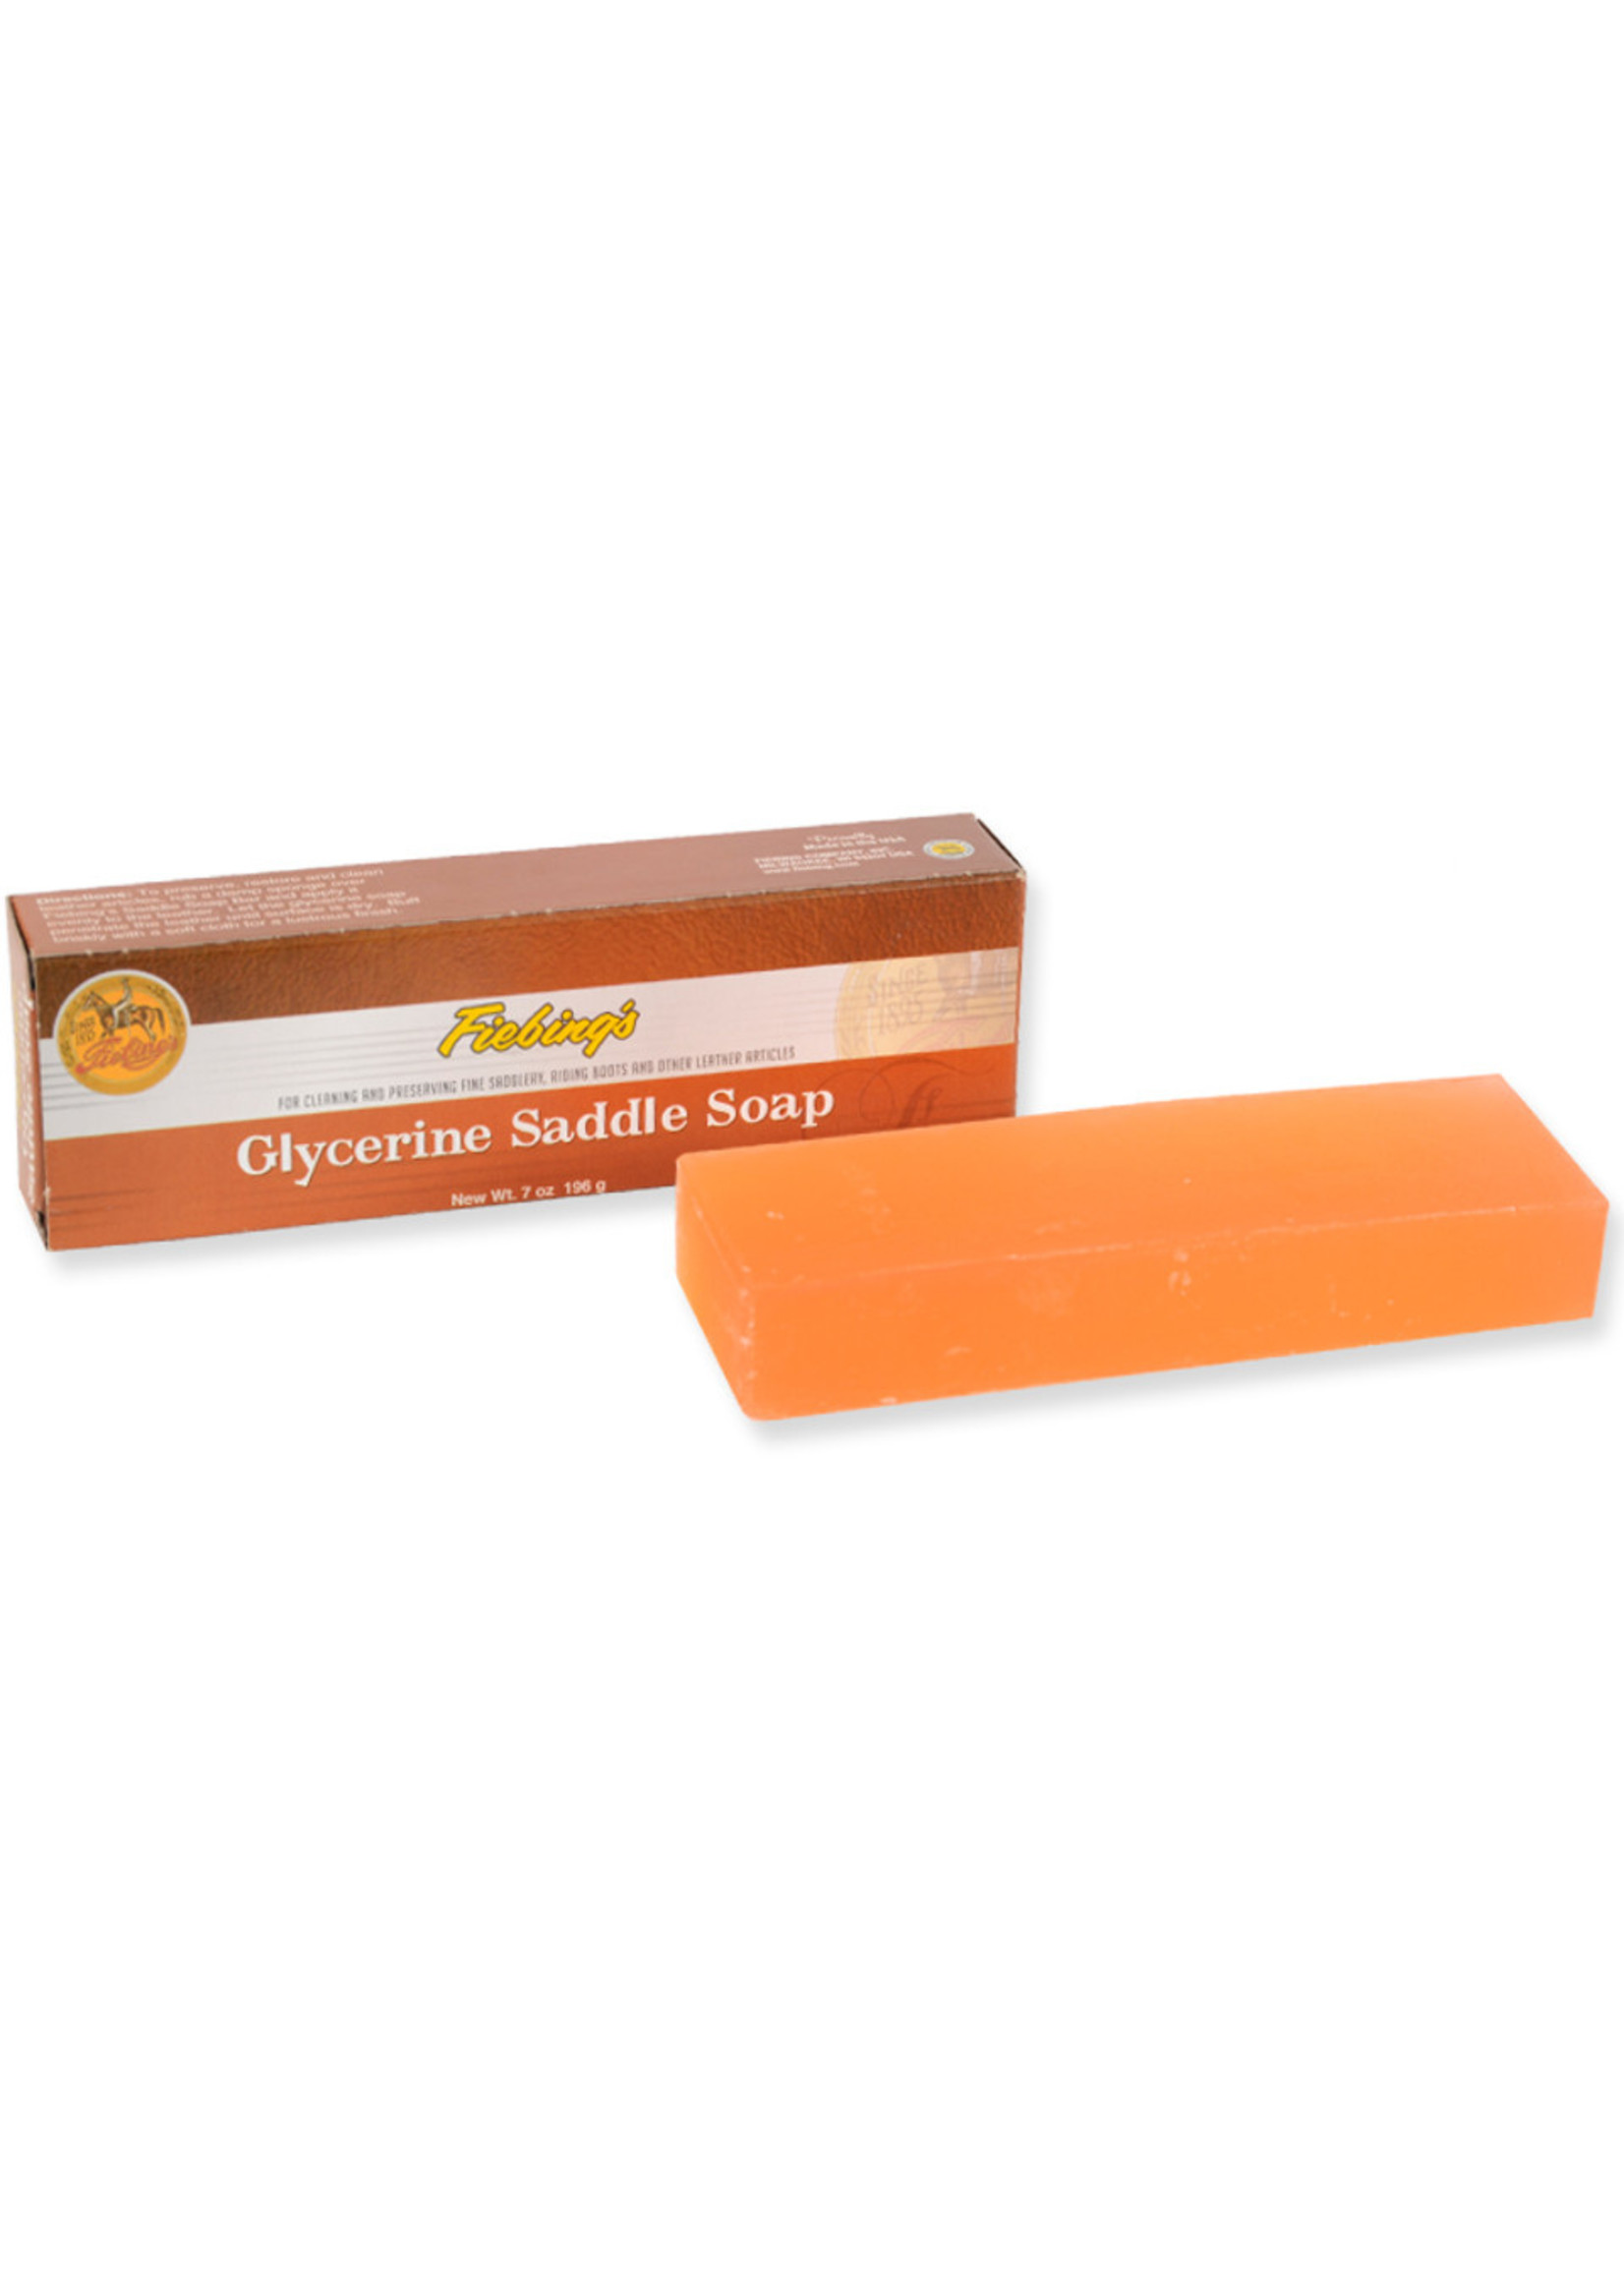 Fiebing Glycerine Saddle Soap